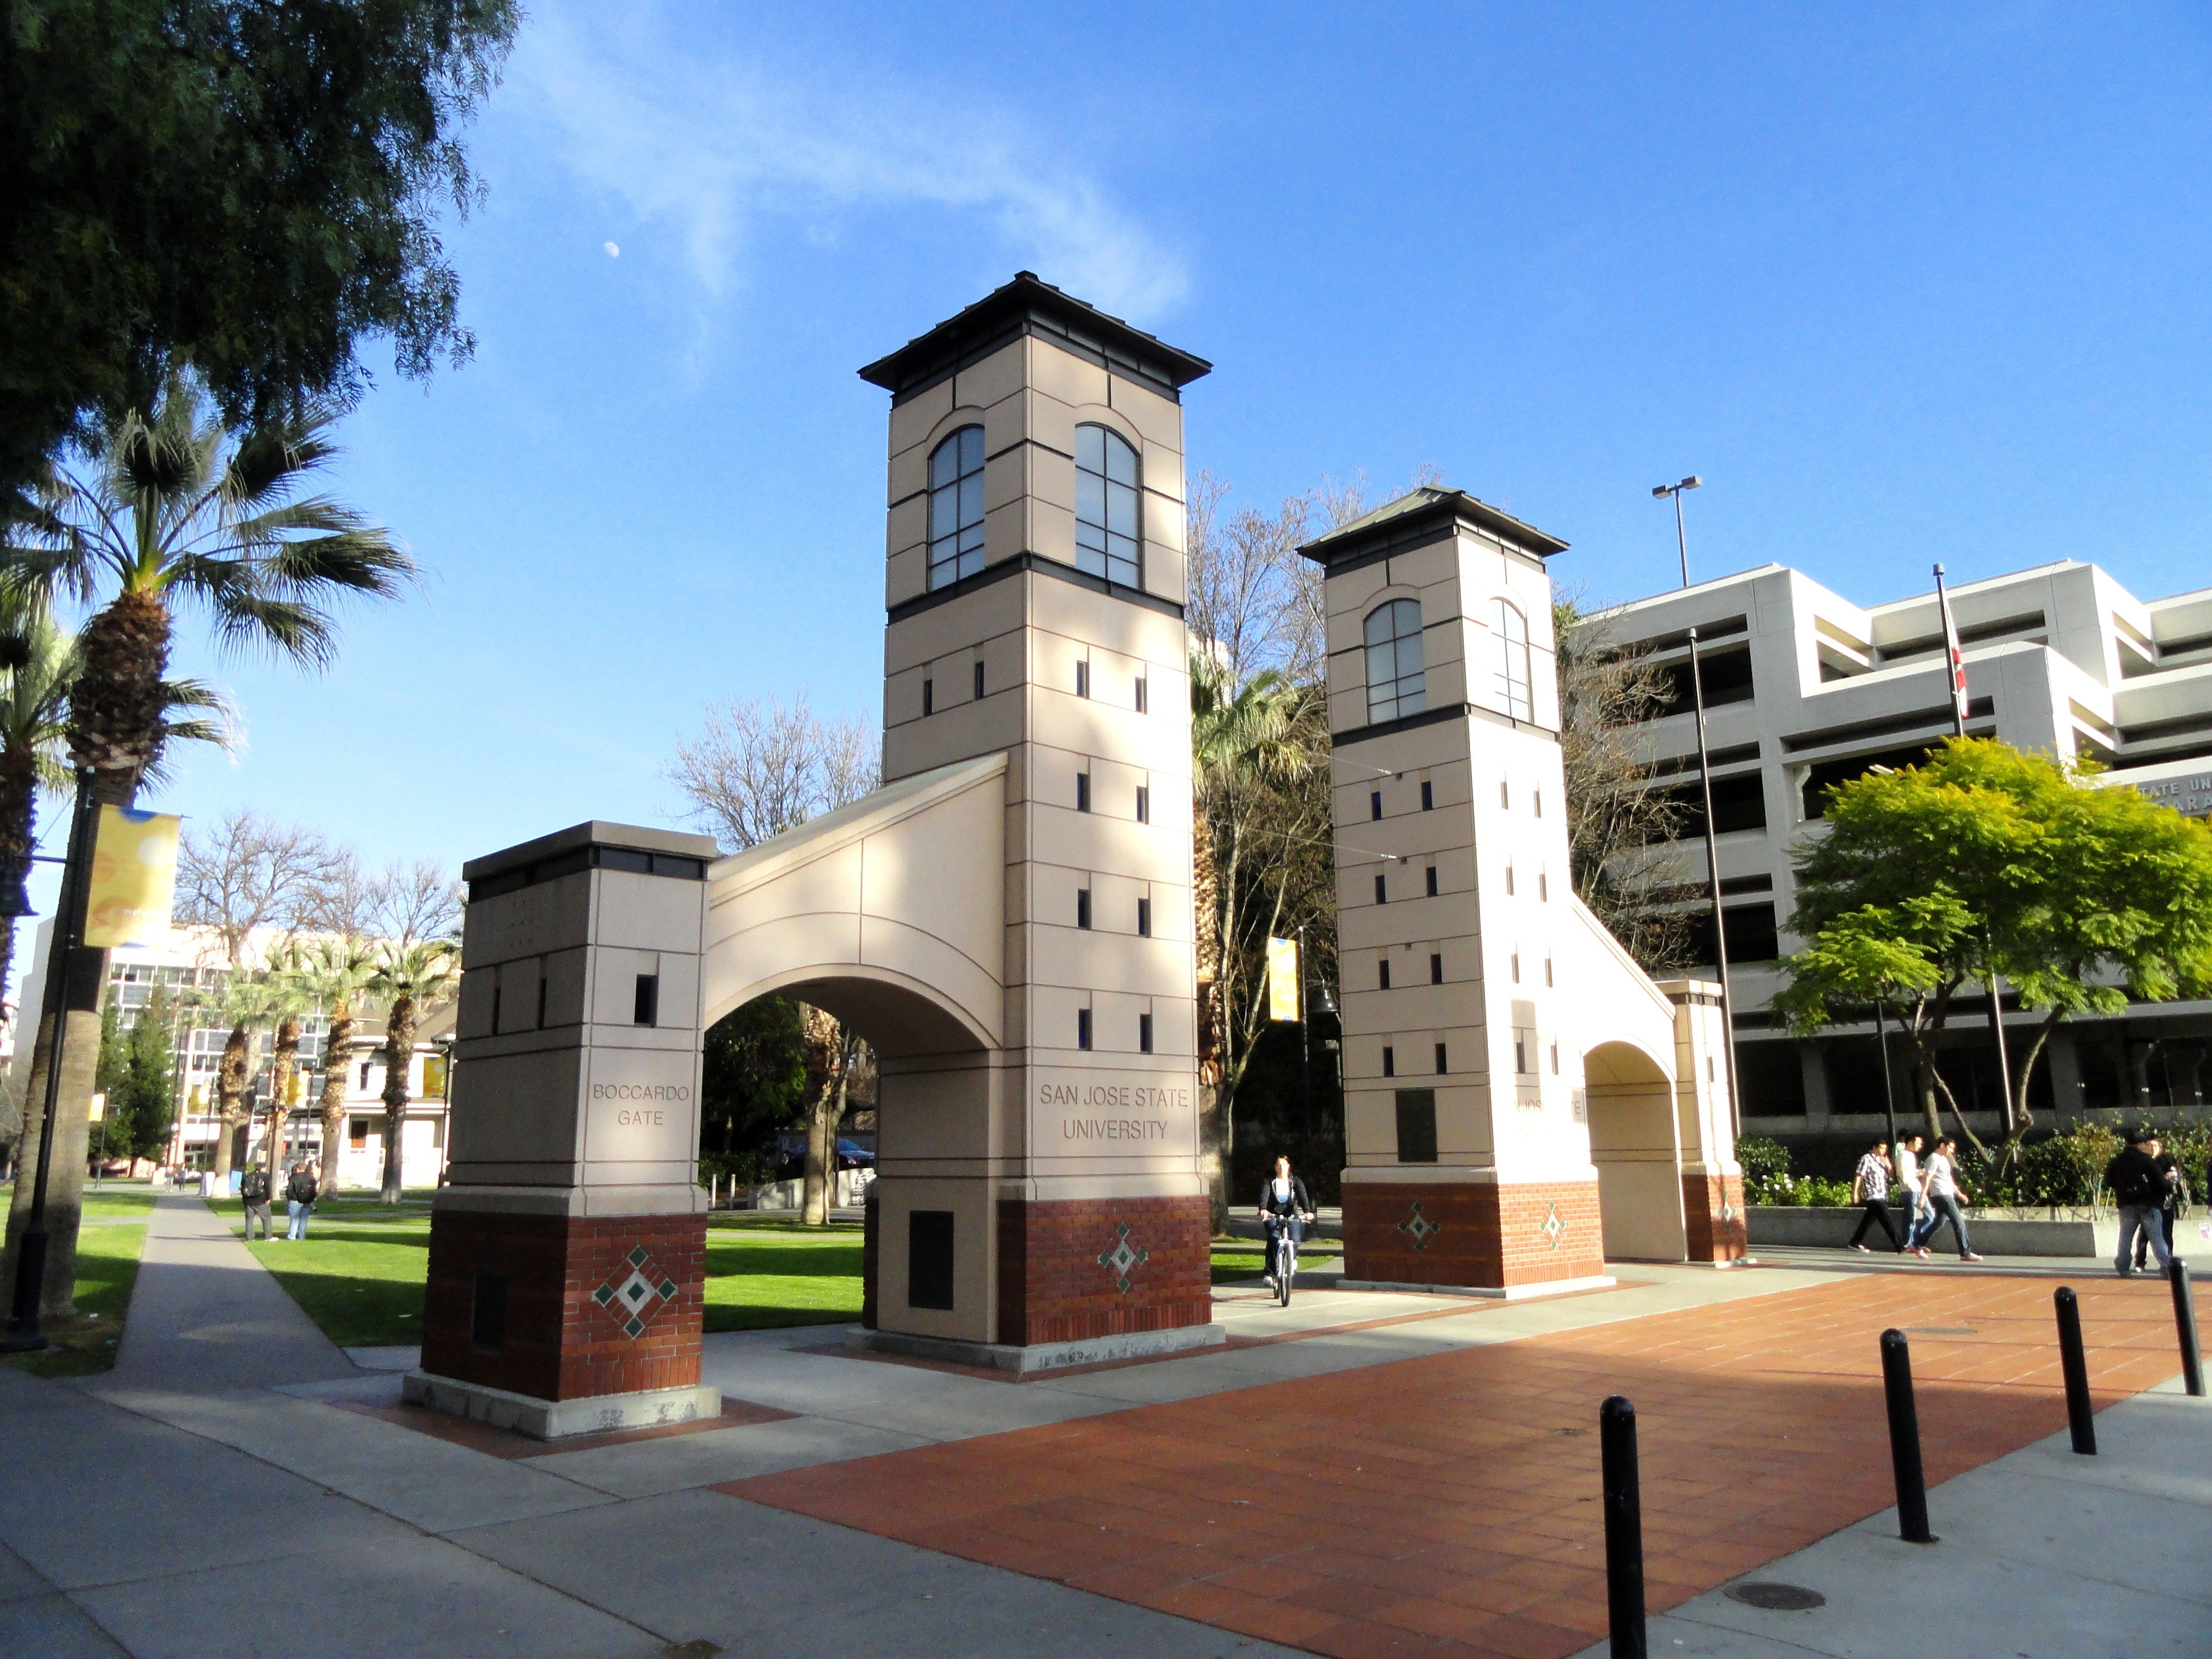 California, San Jose, University, School, architecture, building exterior